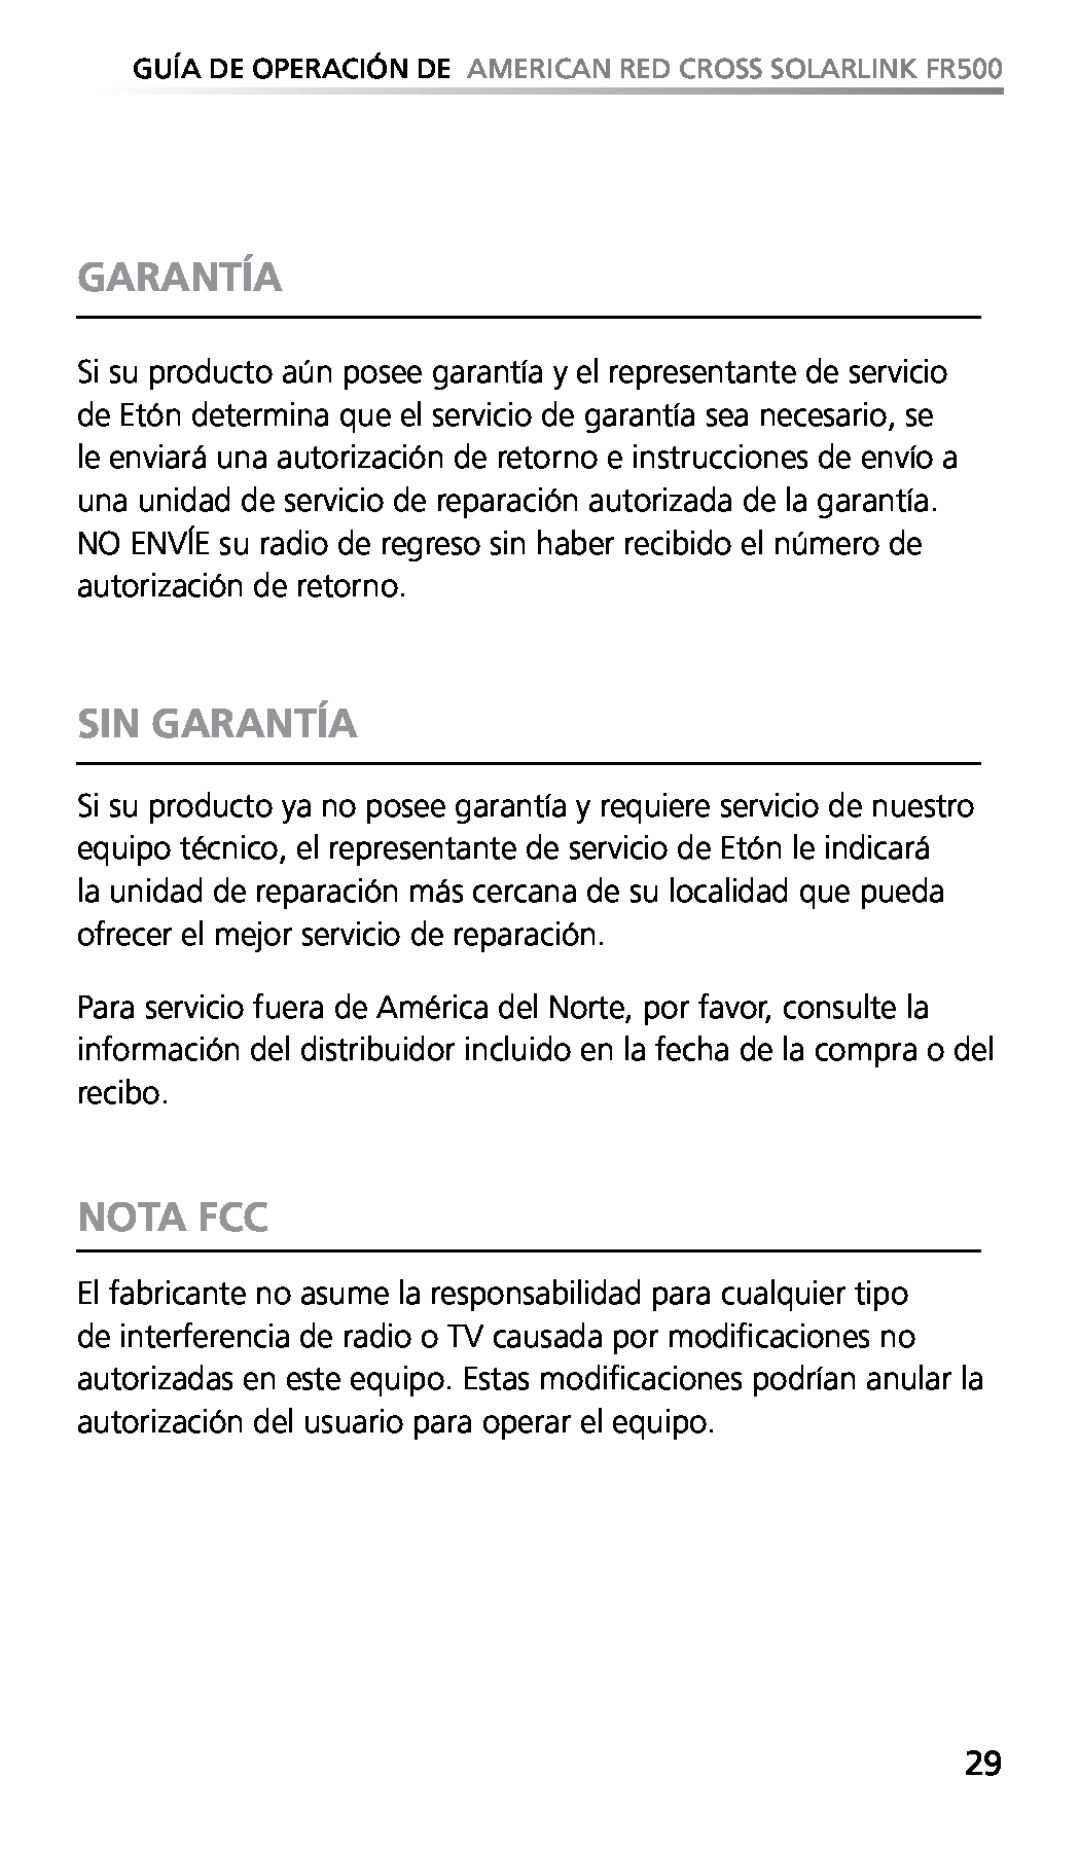 Eton FR500 owner manual Sin Garantía, Nota FCC 